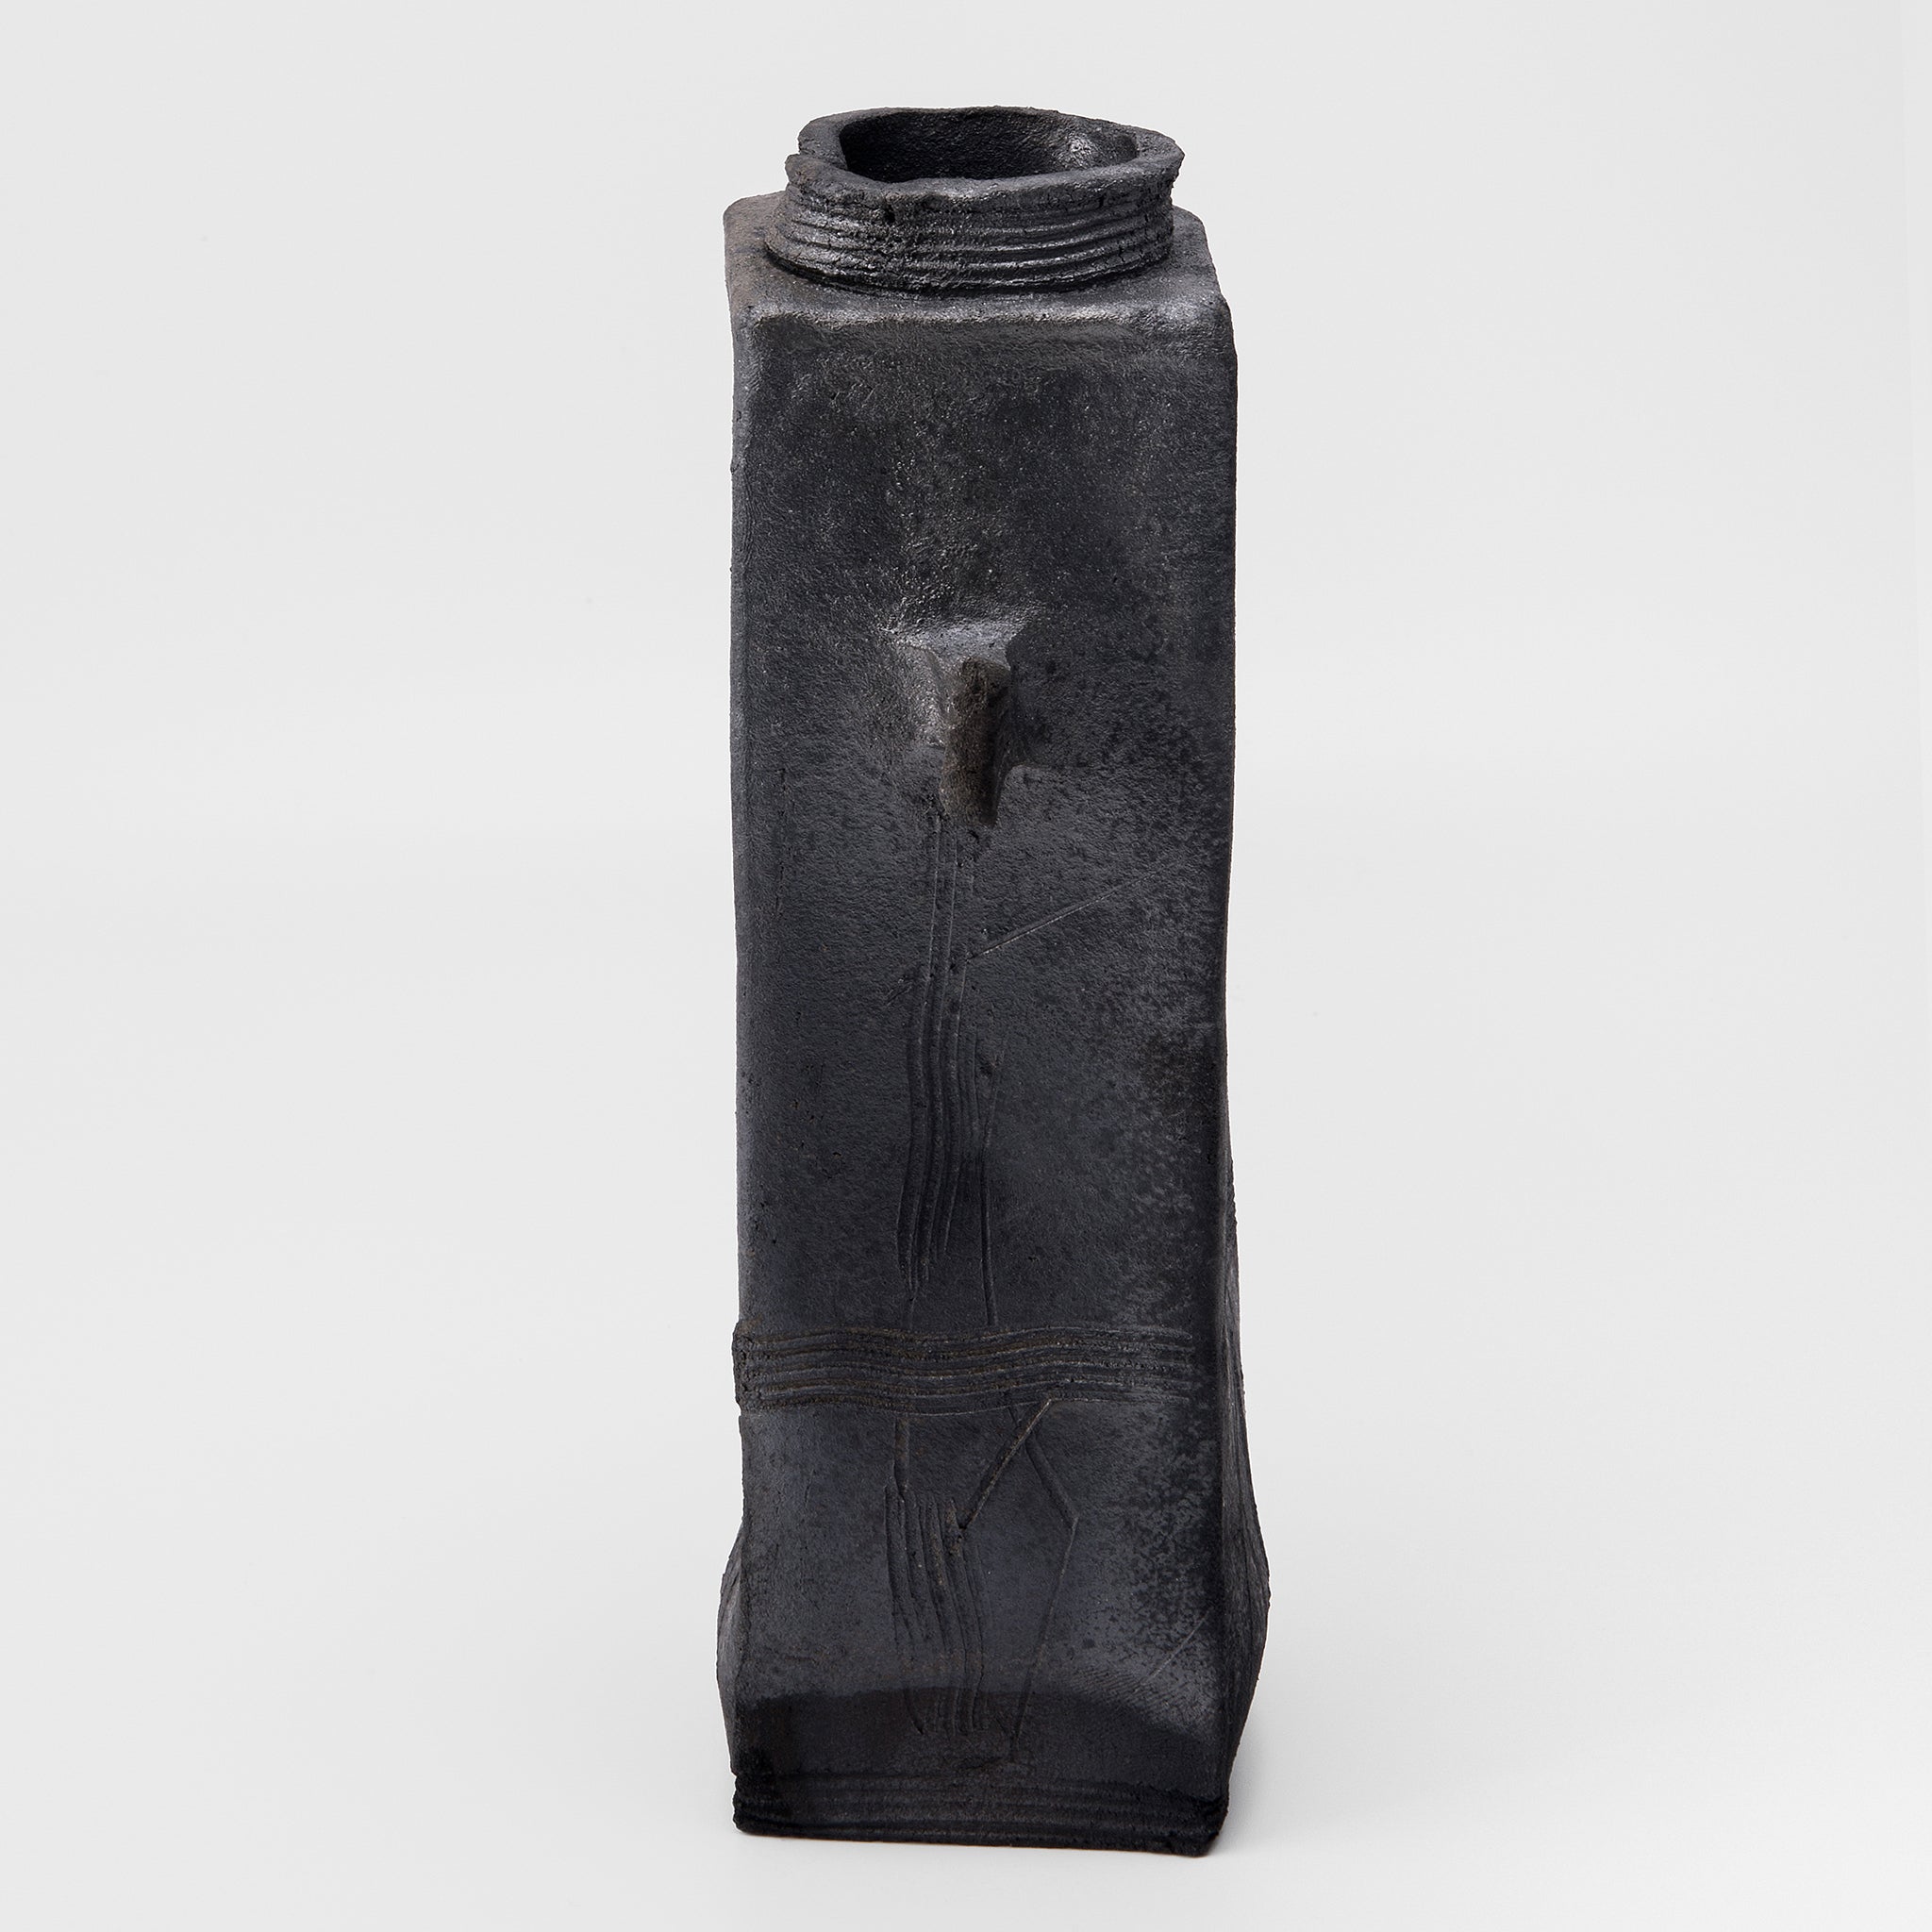 Black Vase No.214/22